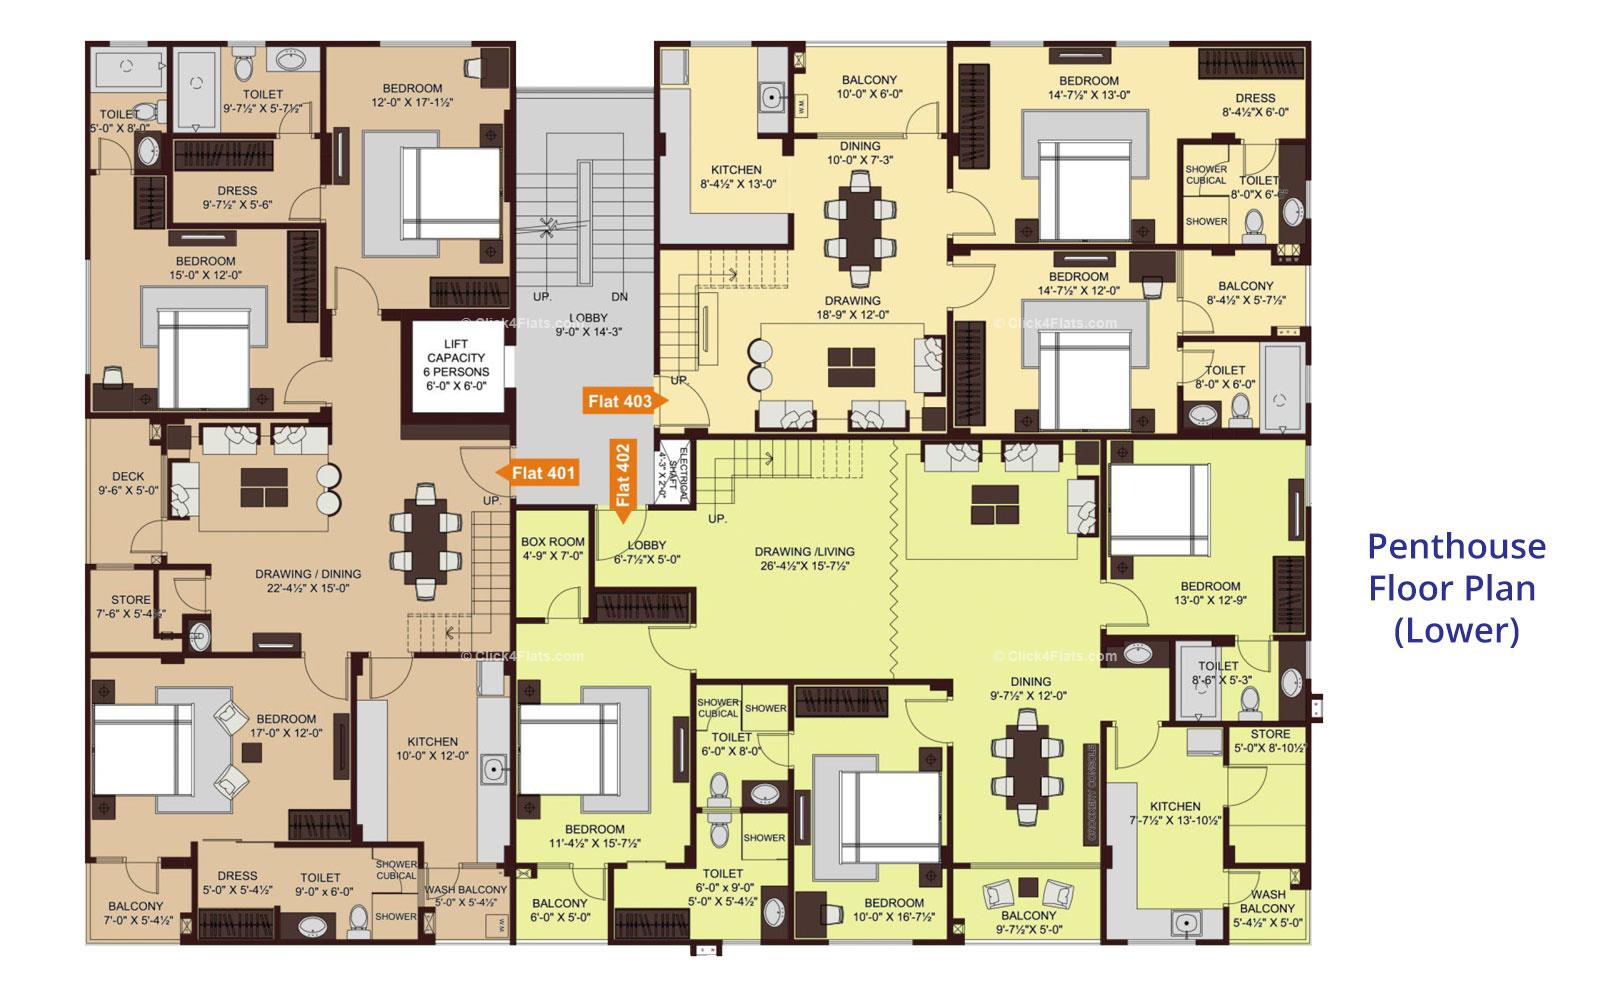 Ridhiraj Enclave Lower Penthouse Floor Plan